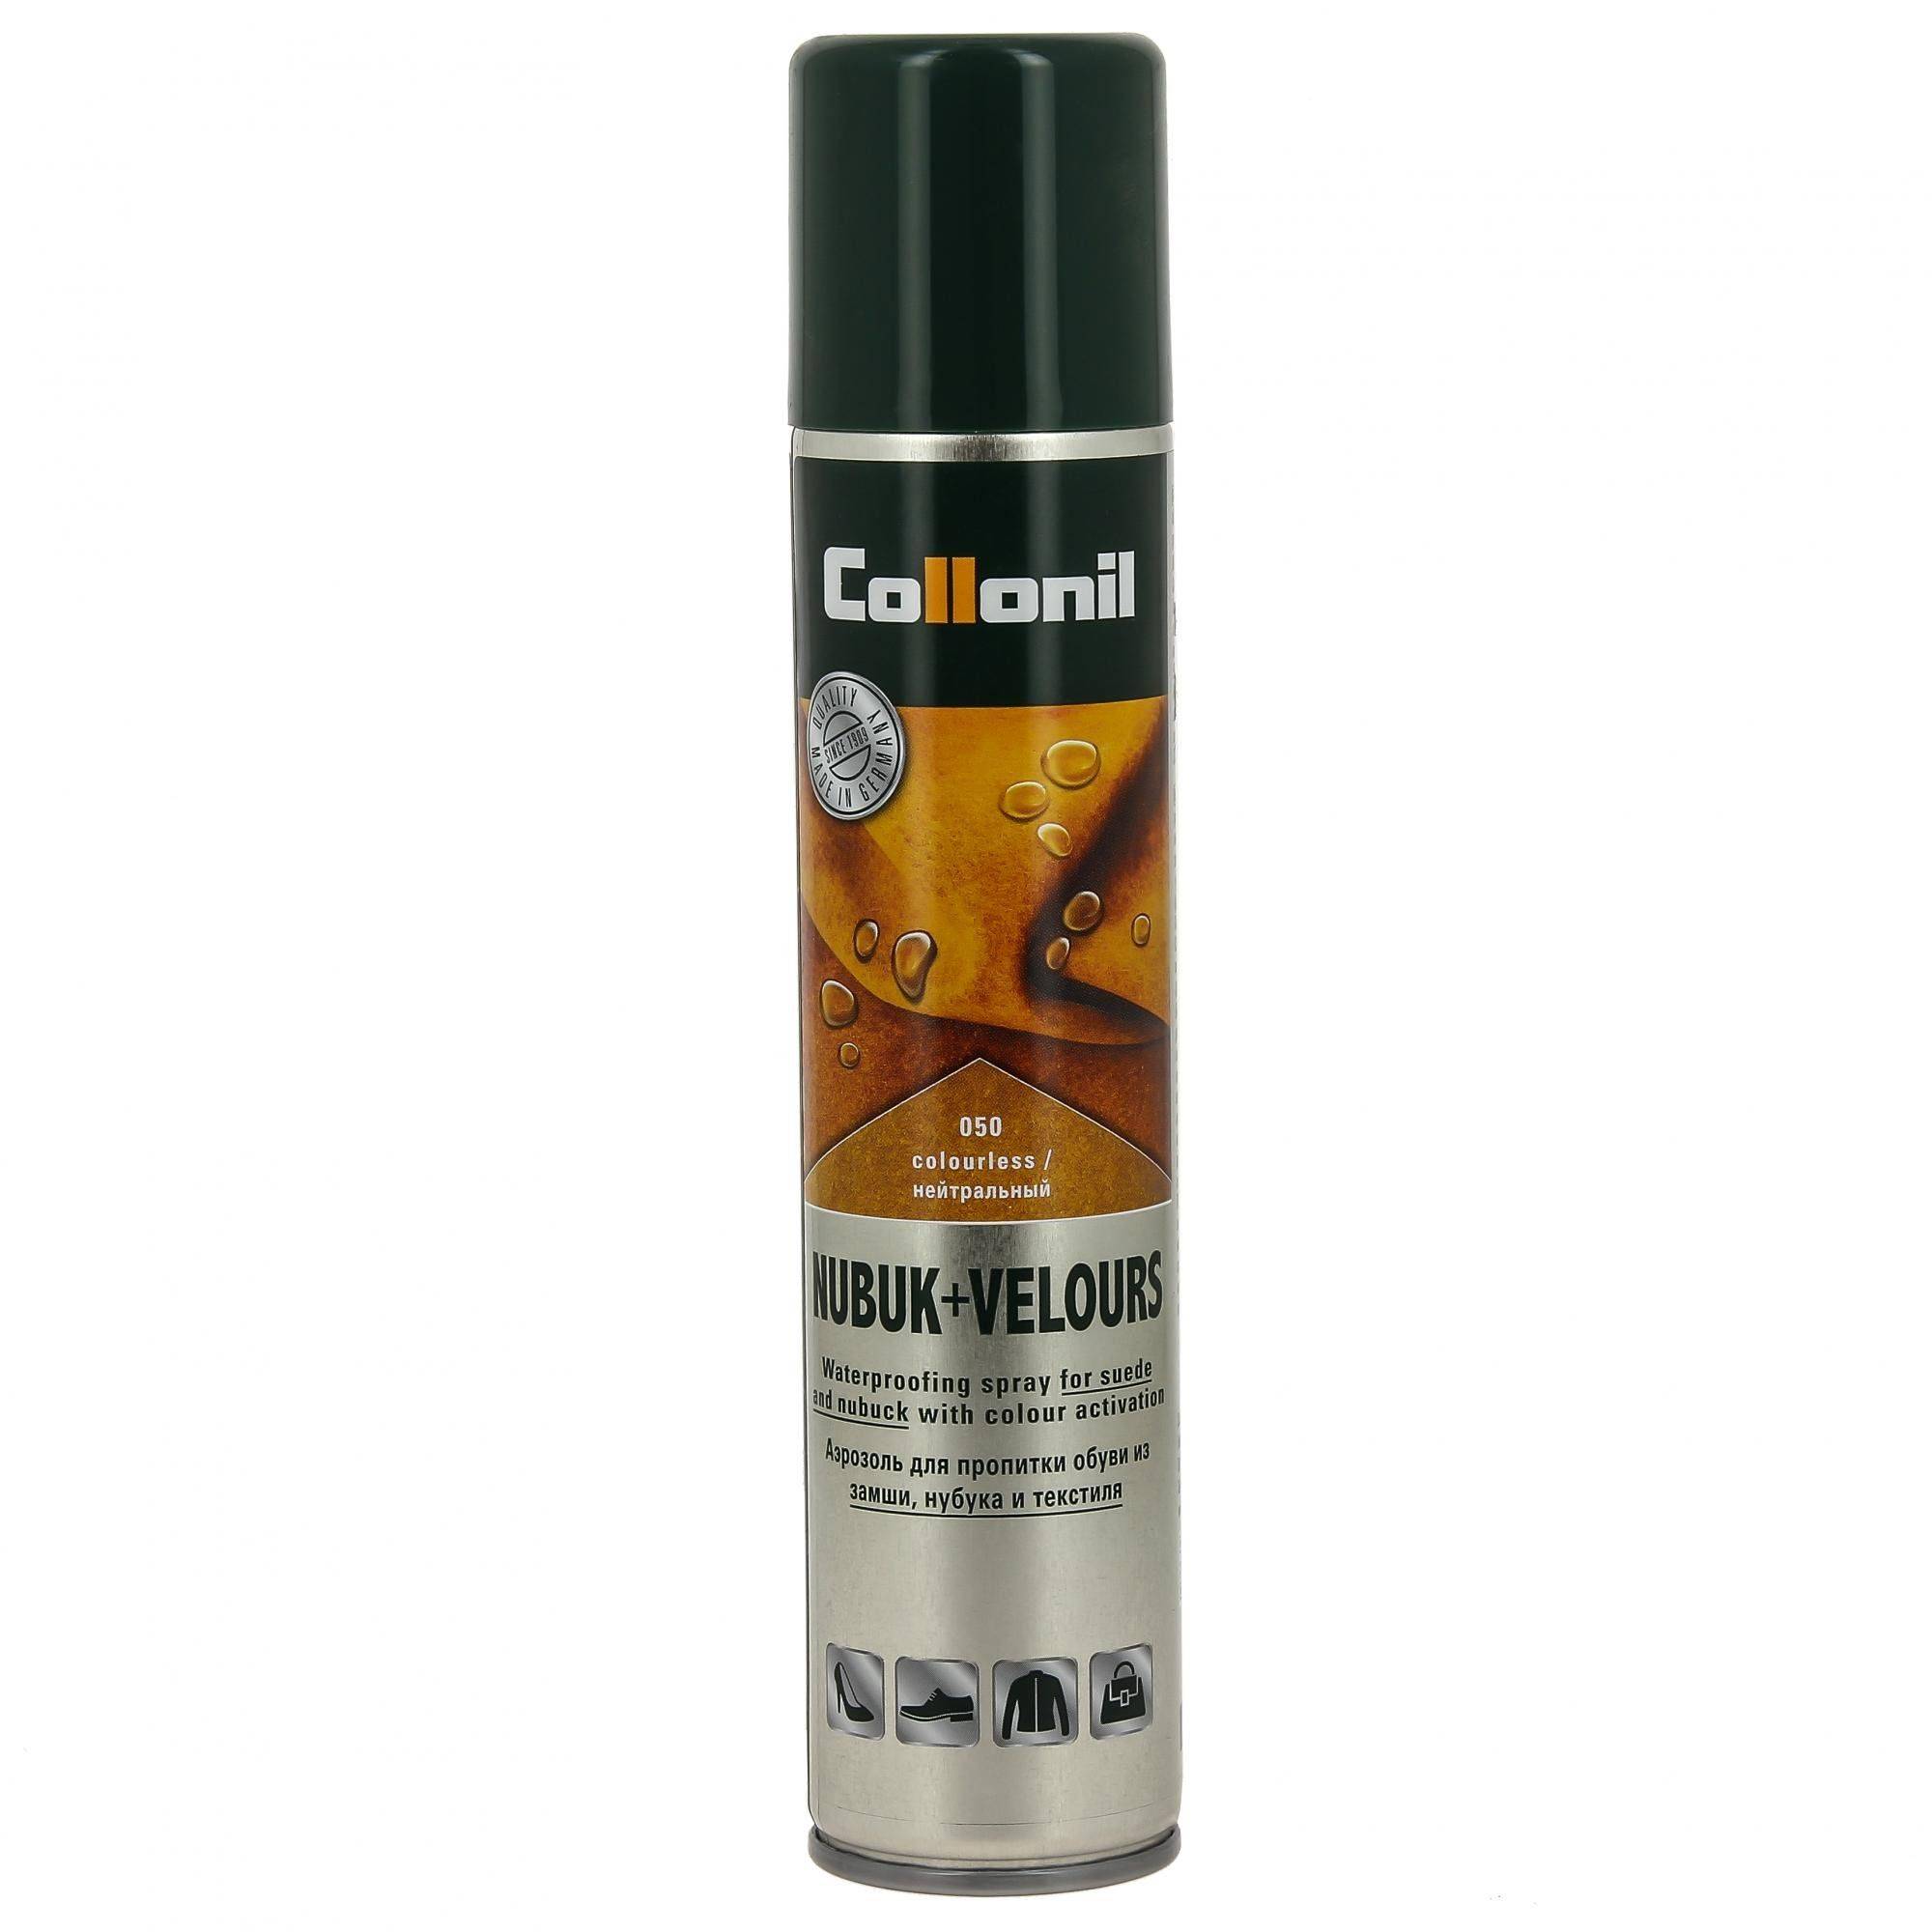 Collonil: Vario Spray (универсальный спрей)